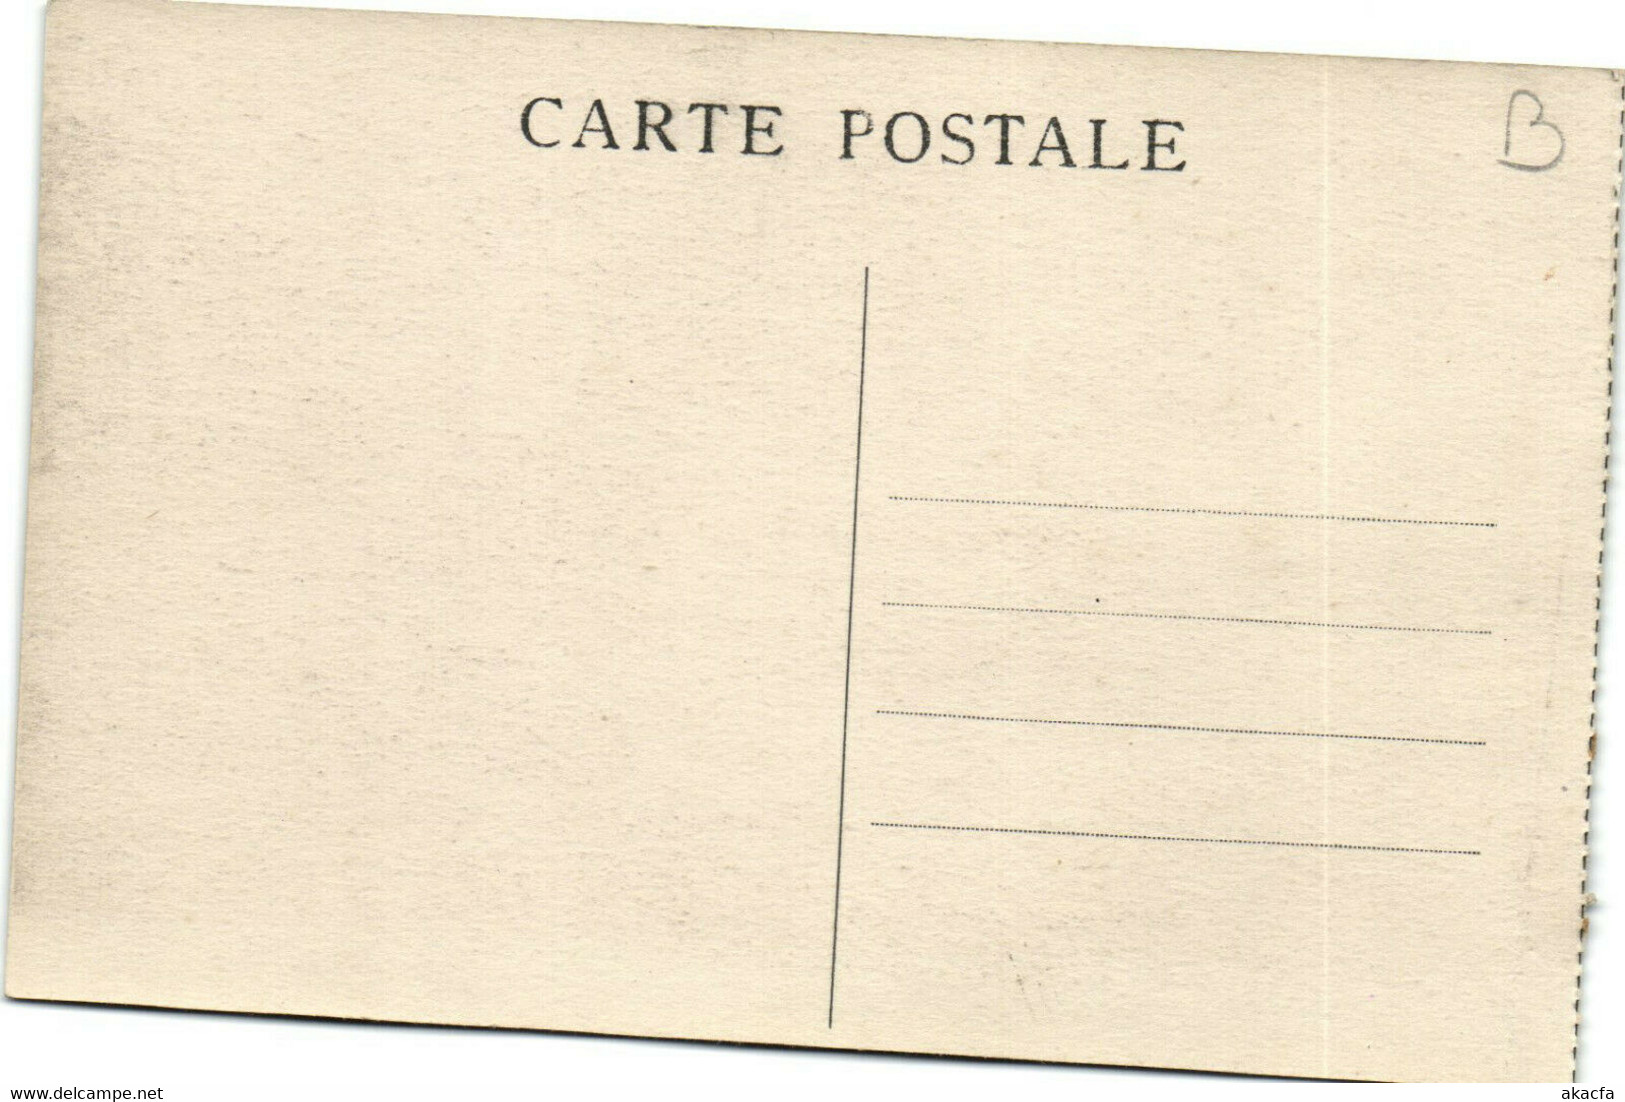 PC UK, SALOMON ISLANDS, UN VILLAGE INDIGÉNE, Vintage Postcard (b33521) - Solomoneilanden